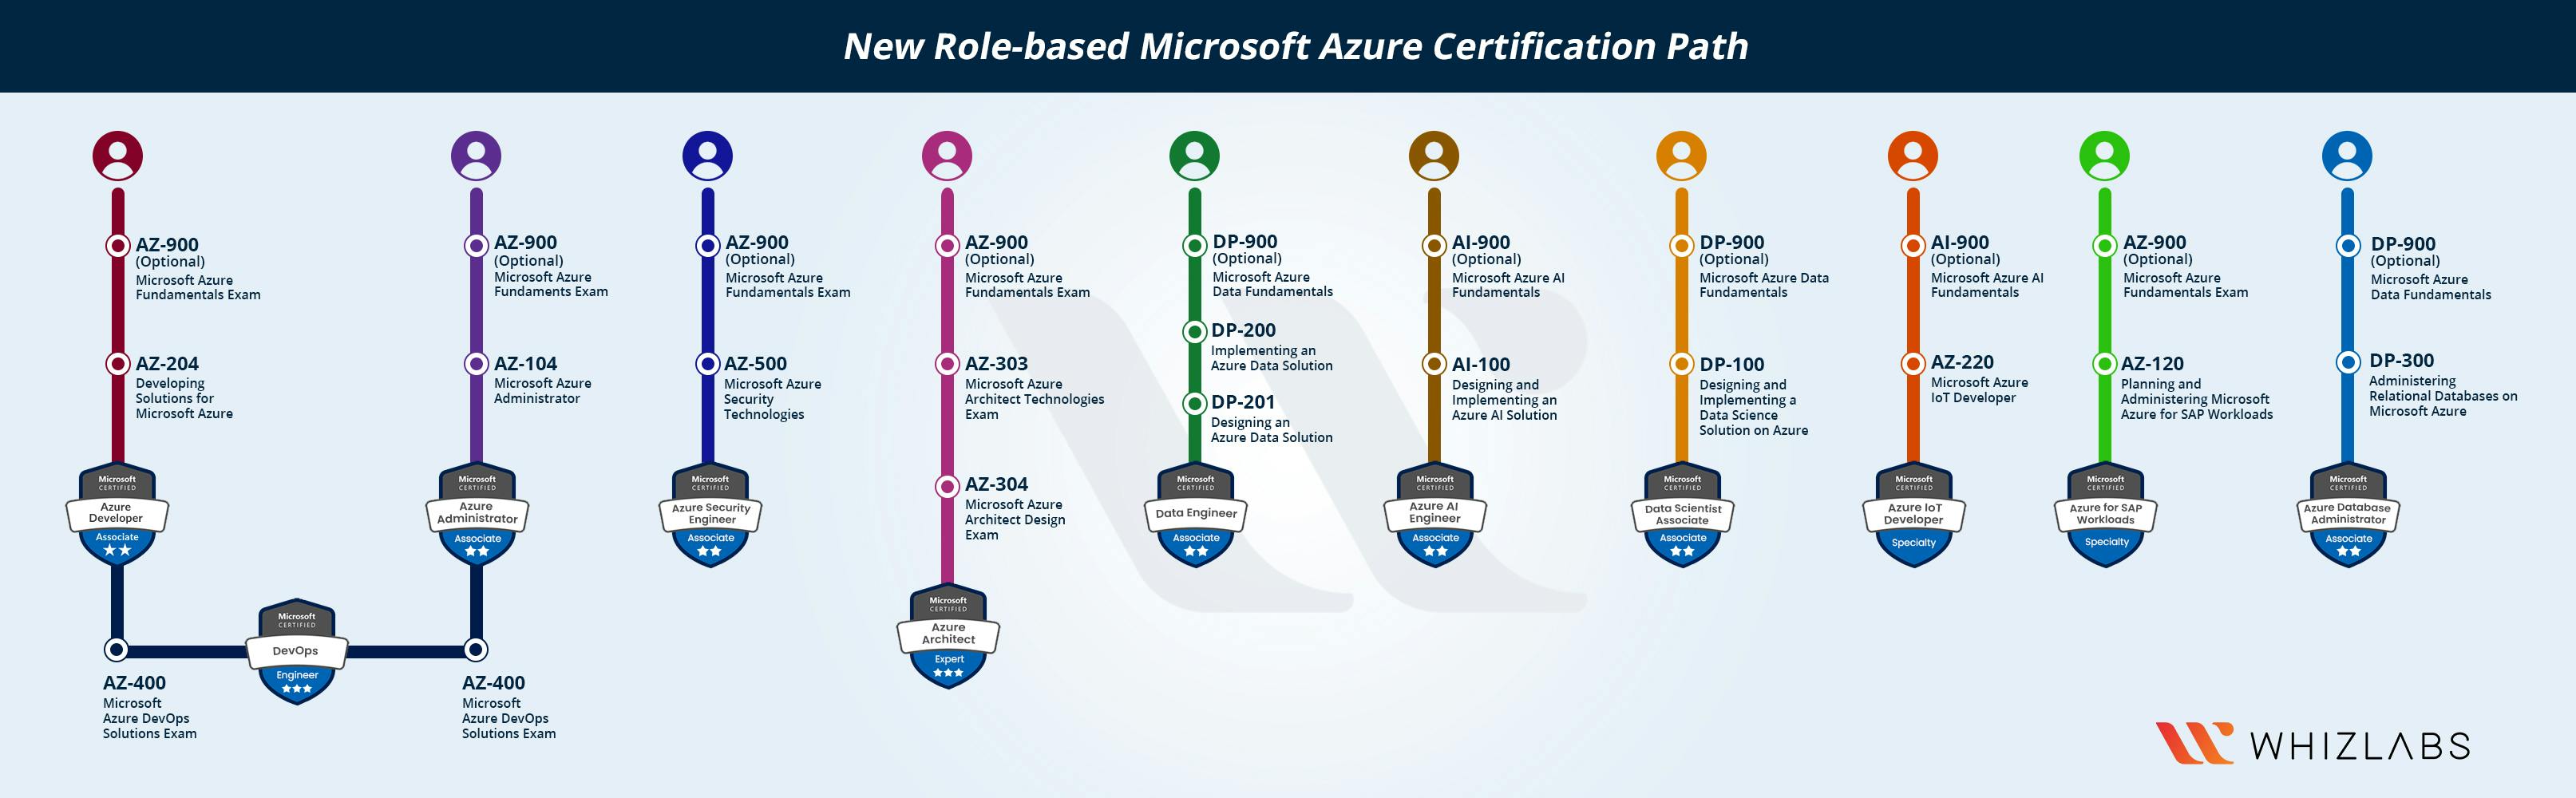 azure-certification-path-2020.jpg